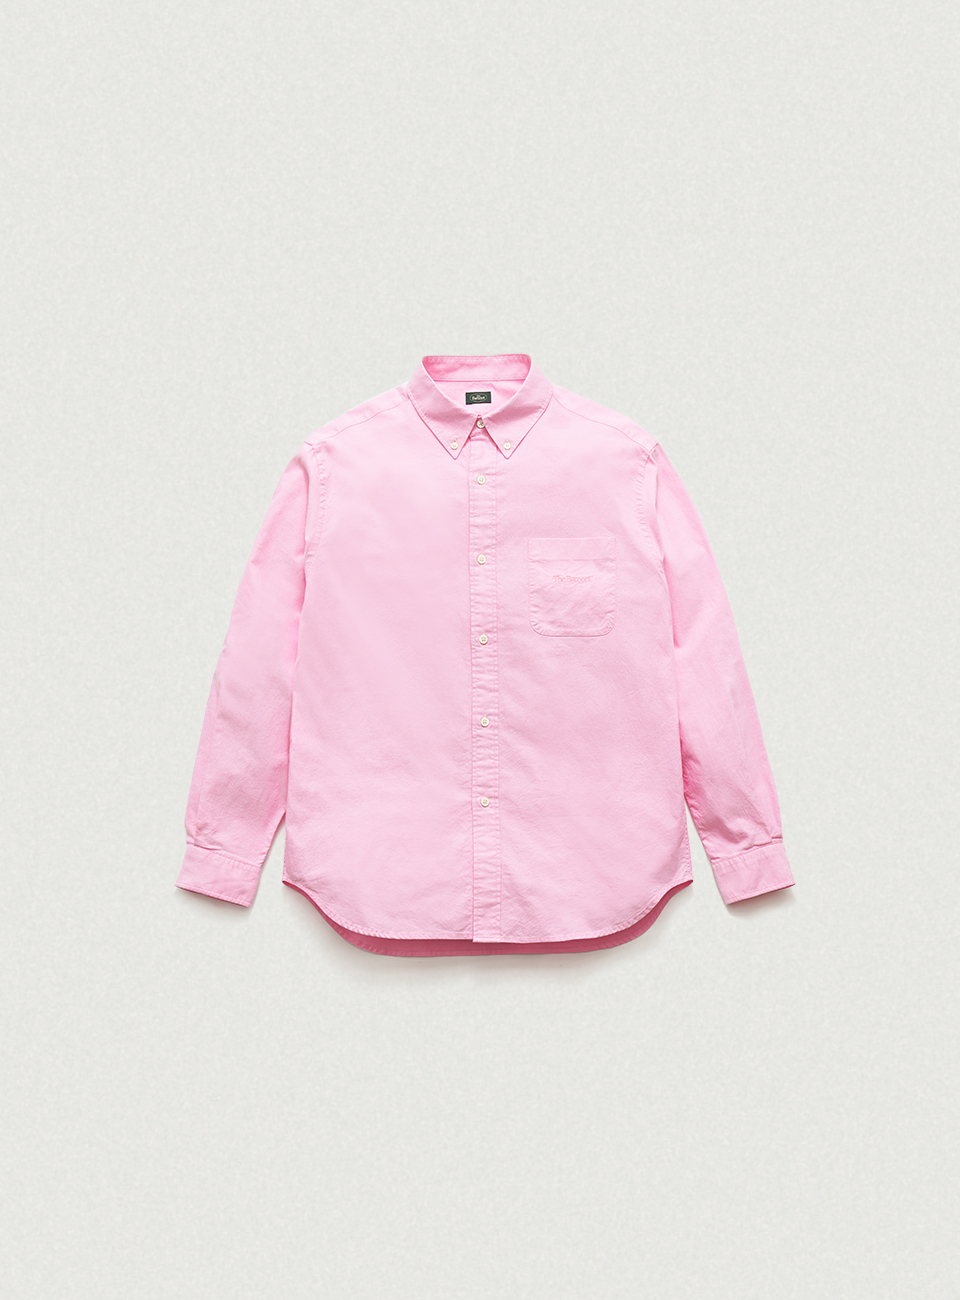 Women’s Pink Tidy Oxford Shirt